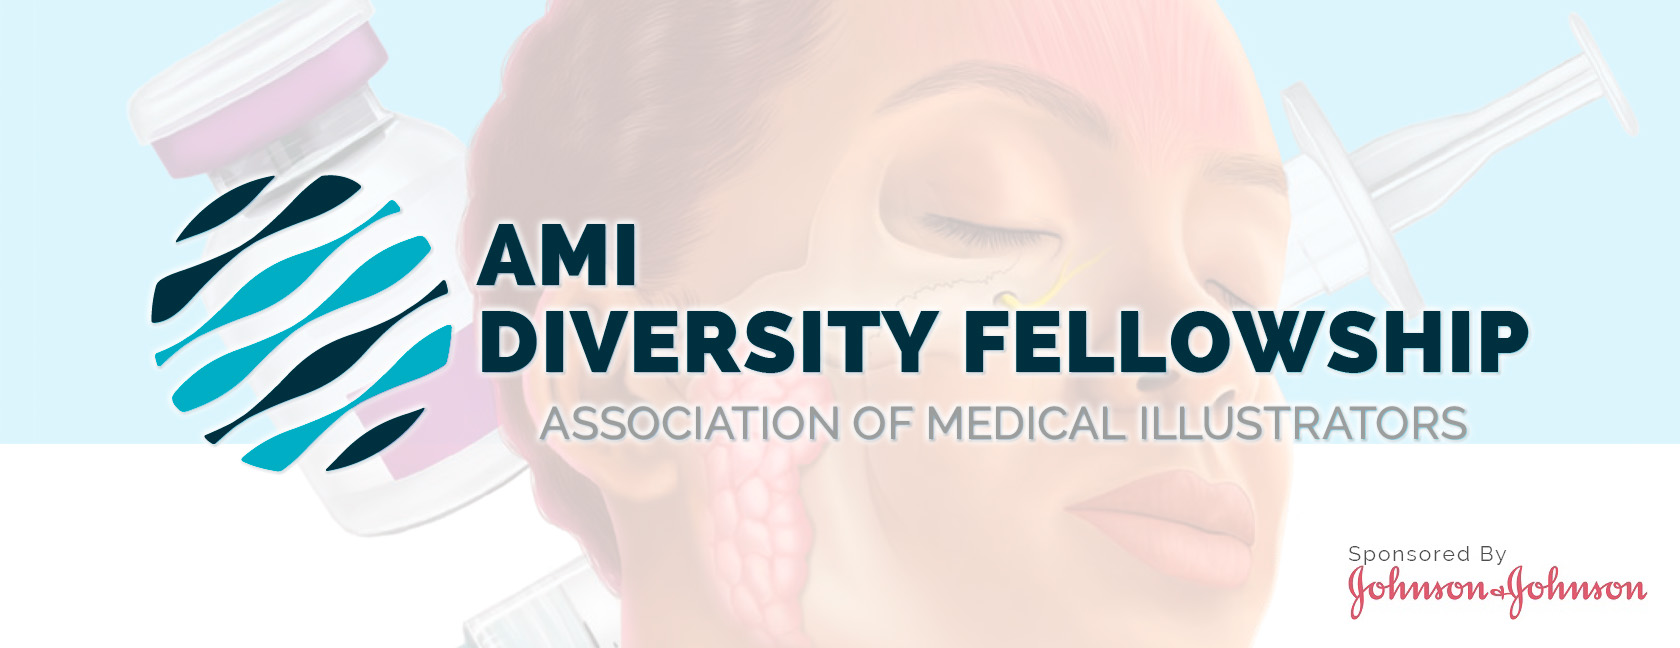 AMI Diversity Fellowship Sponsored by Johnson & Johnson